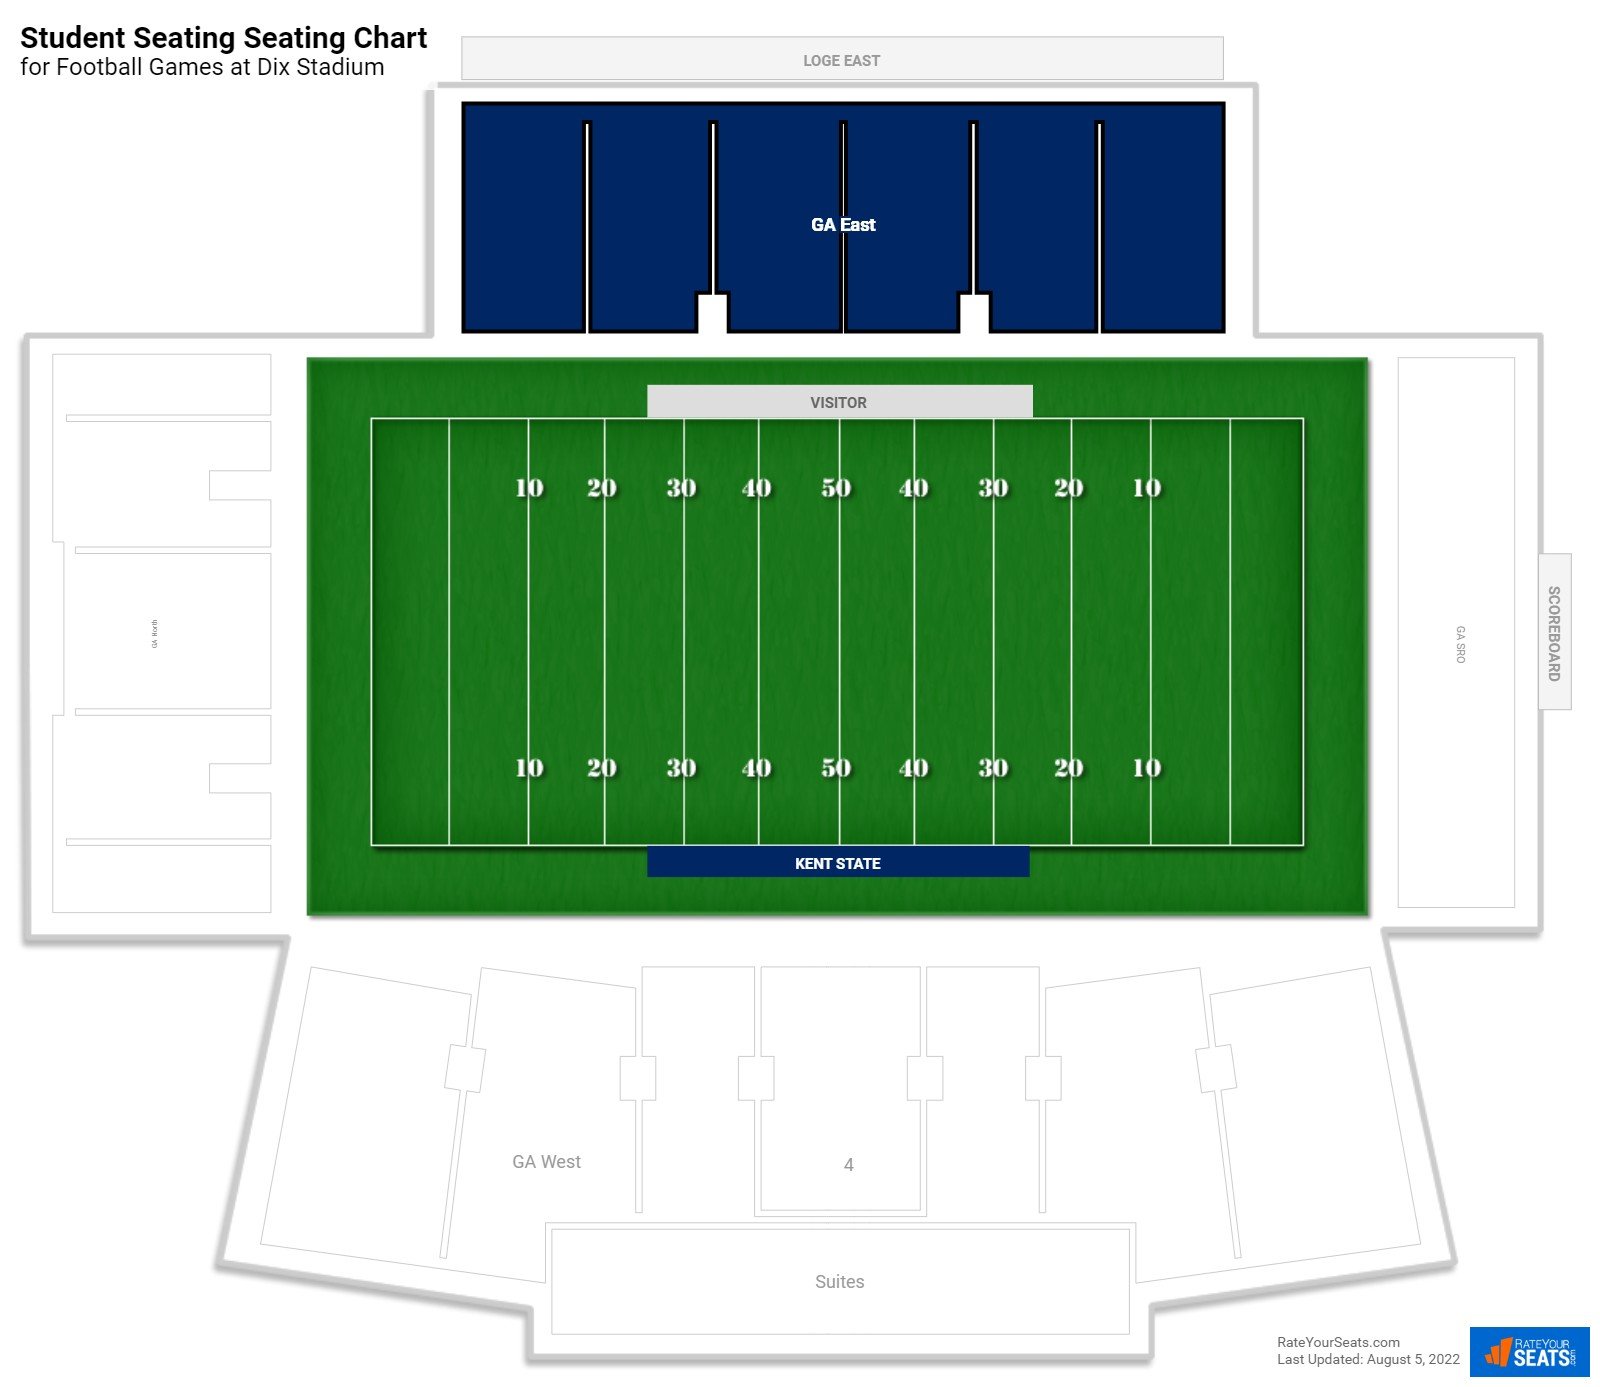 Football Student Seating Seating Chart at Dix Stadium